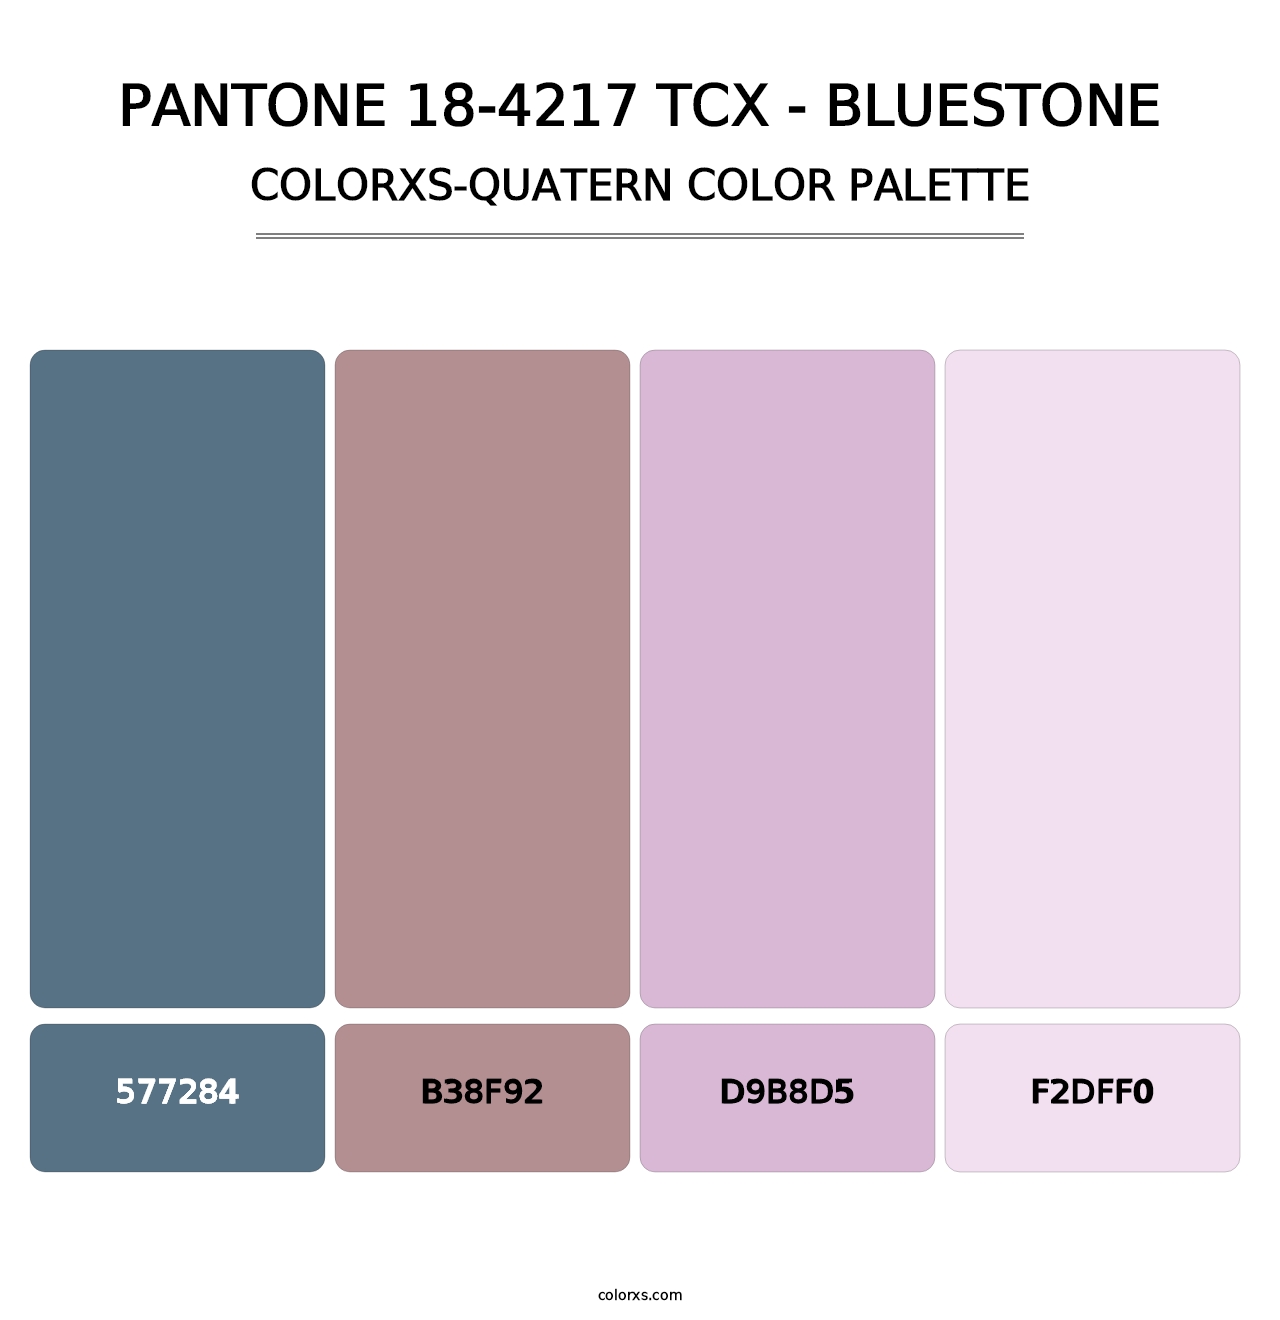 PANTONE 18-4217 TCX - Bluestone - Colorxs Quatern Palette